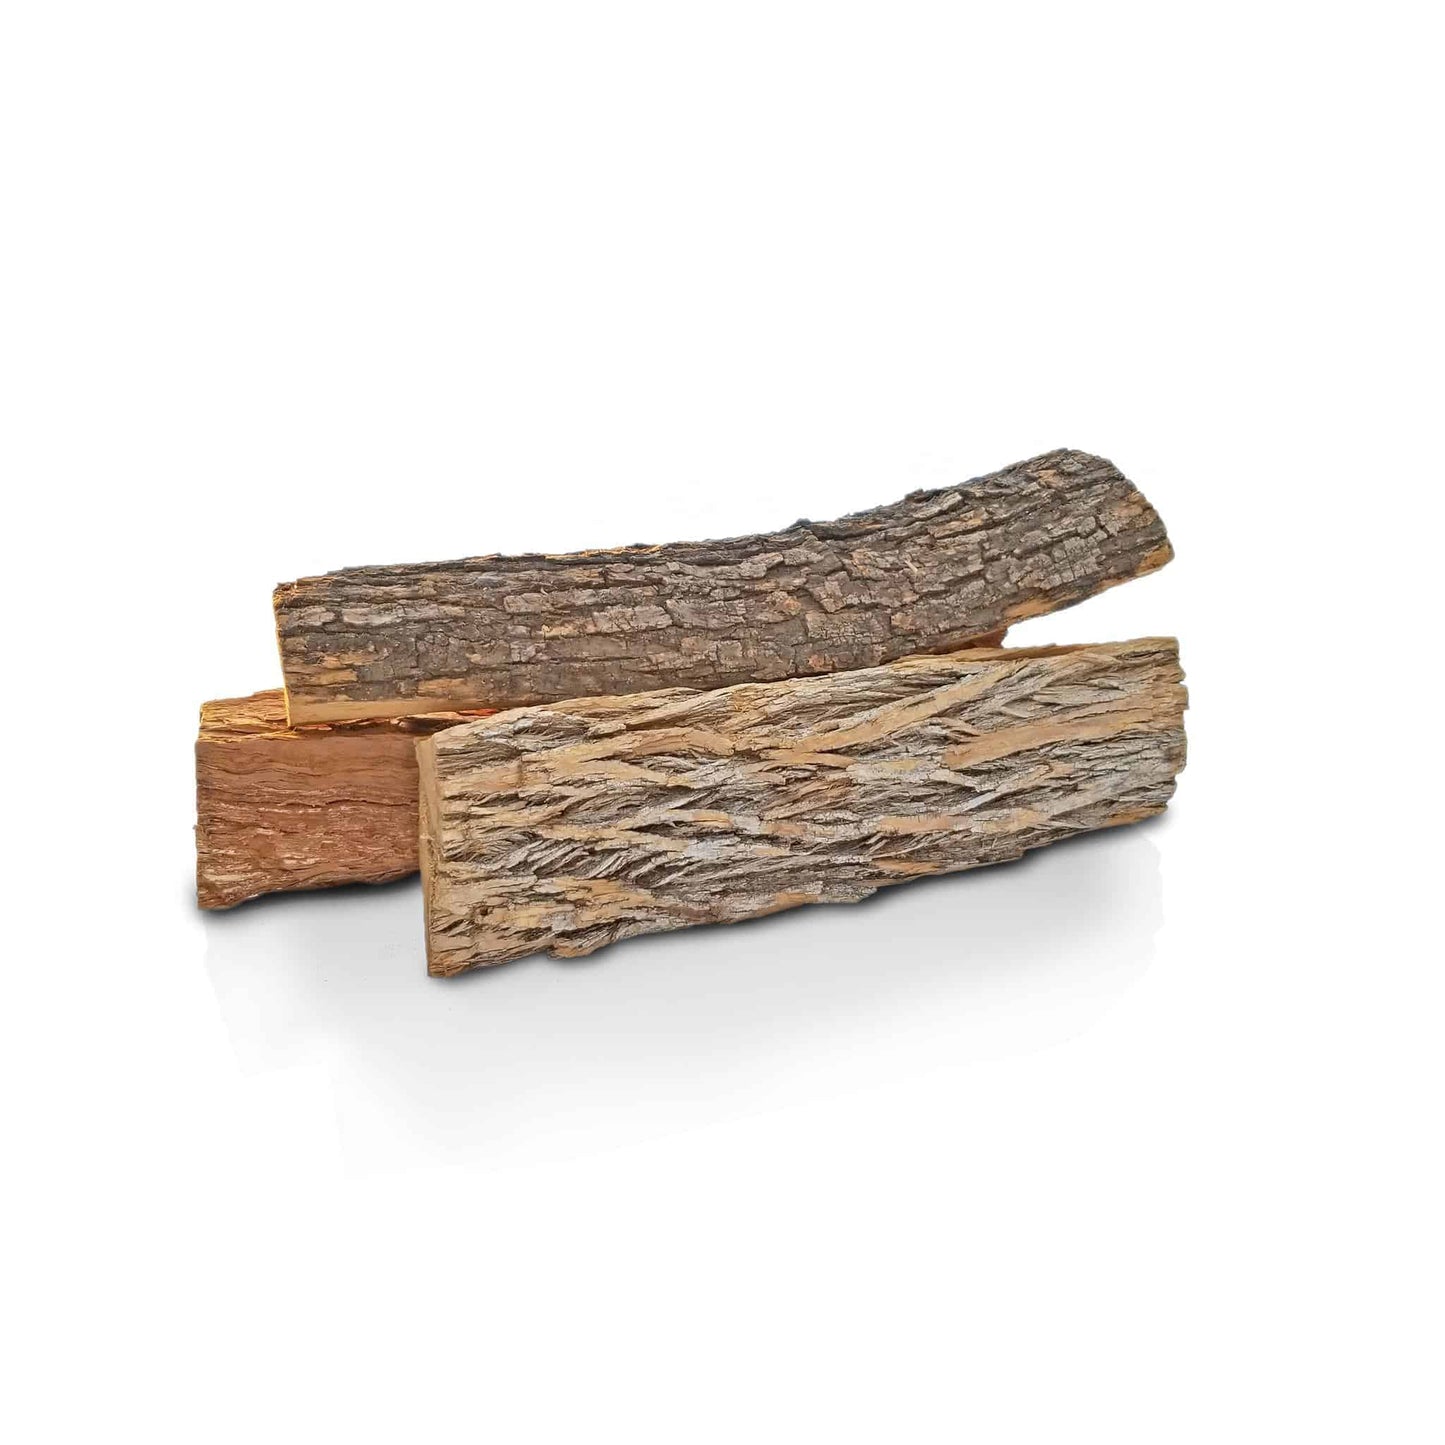 Customers' Favorite Firewood: 1/2 Cord Mix